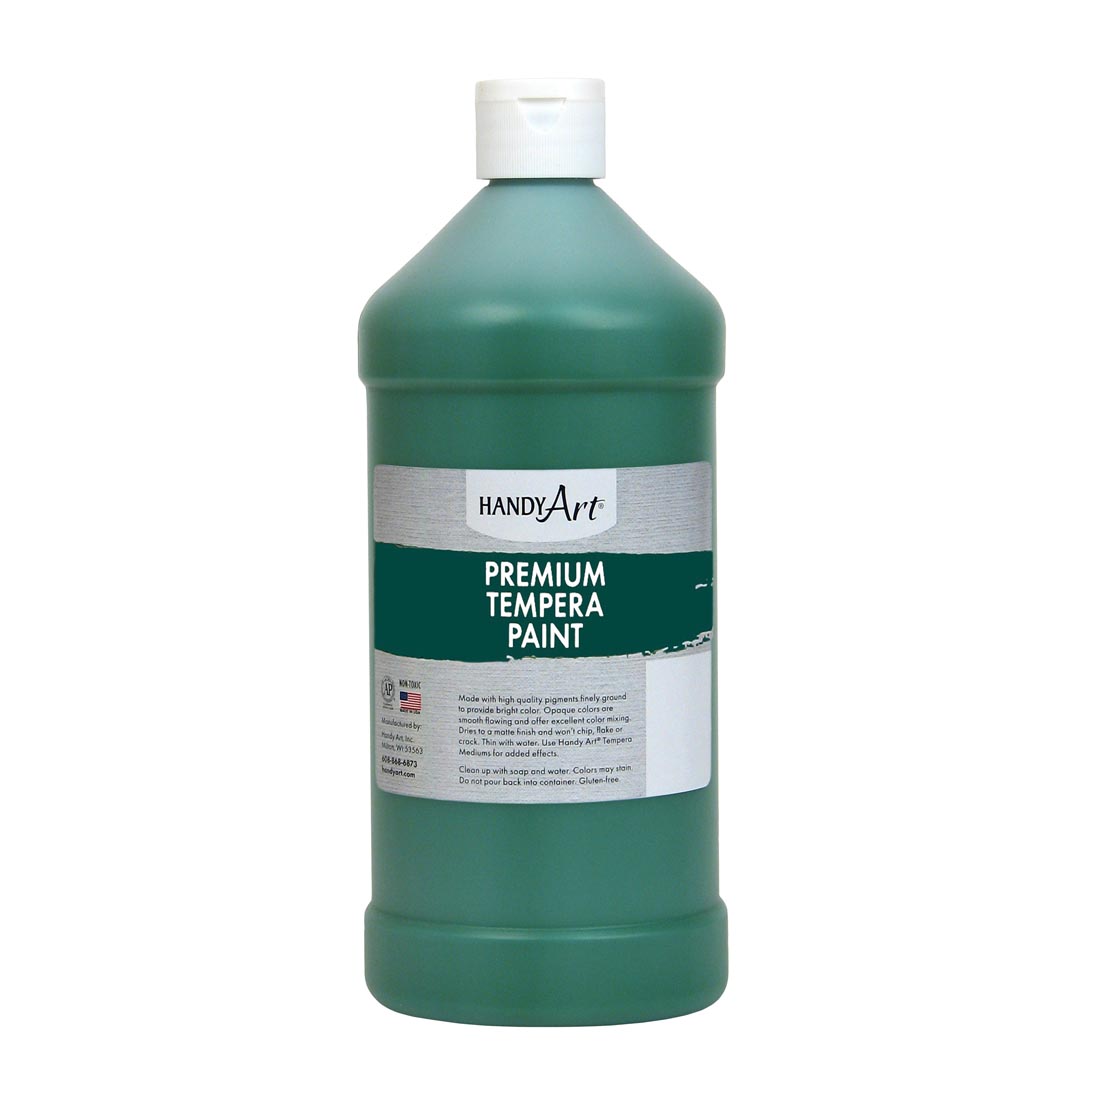 Quart bottle of Green Handy Art Premium Tempera Paint